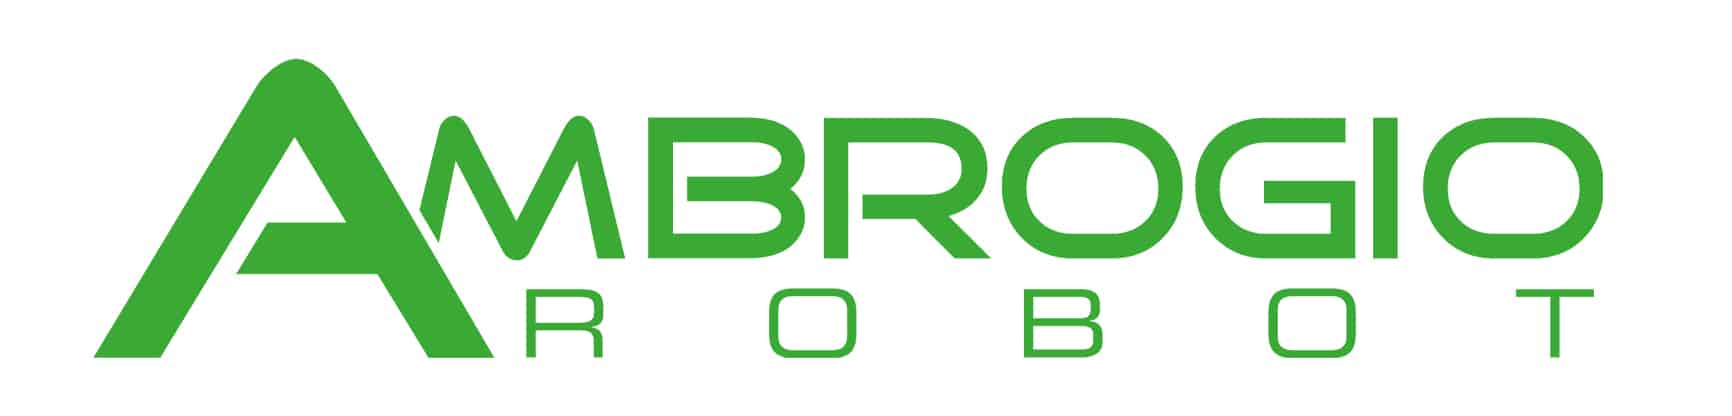 Ambrogio logo - robot lawn mower Australia